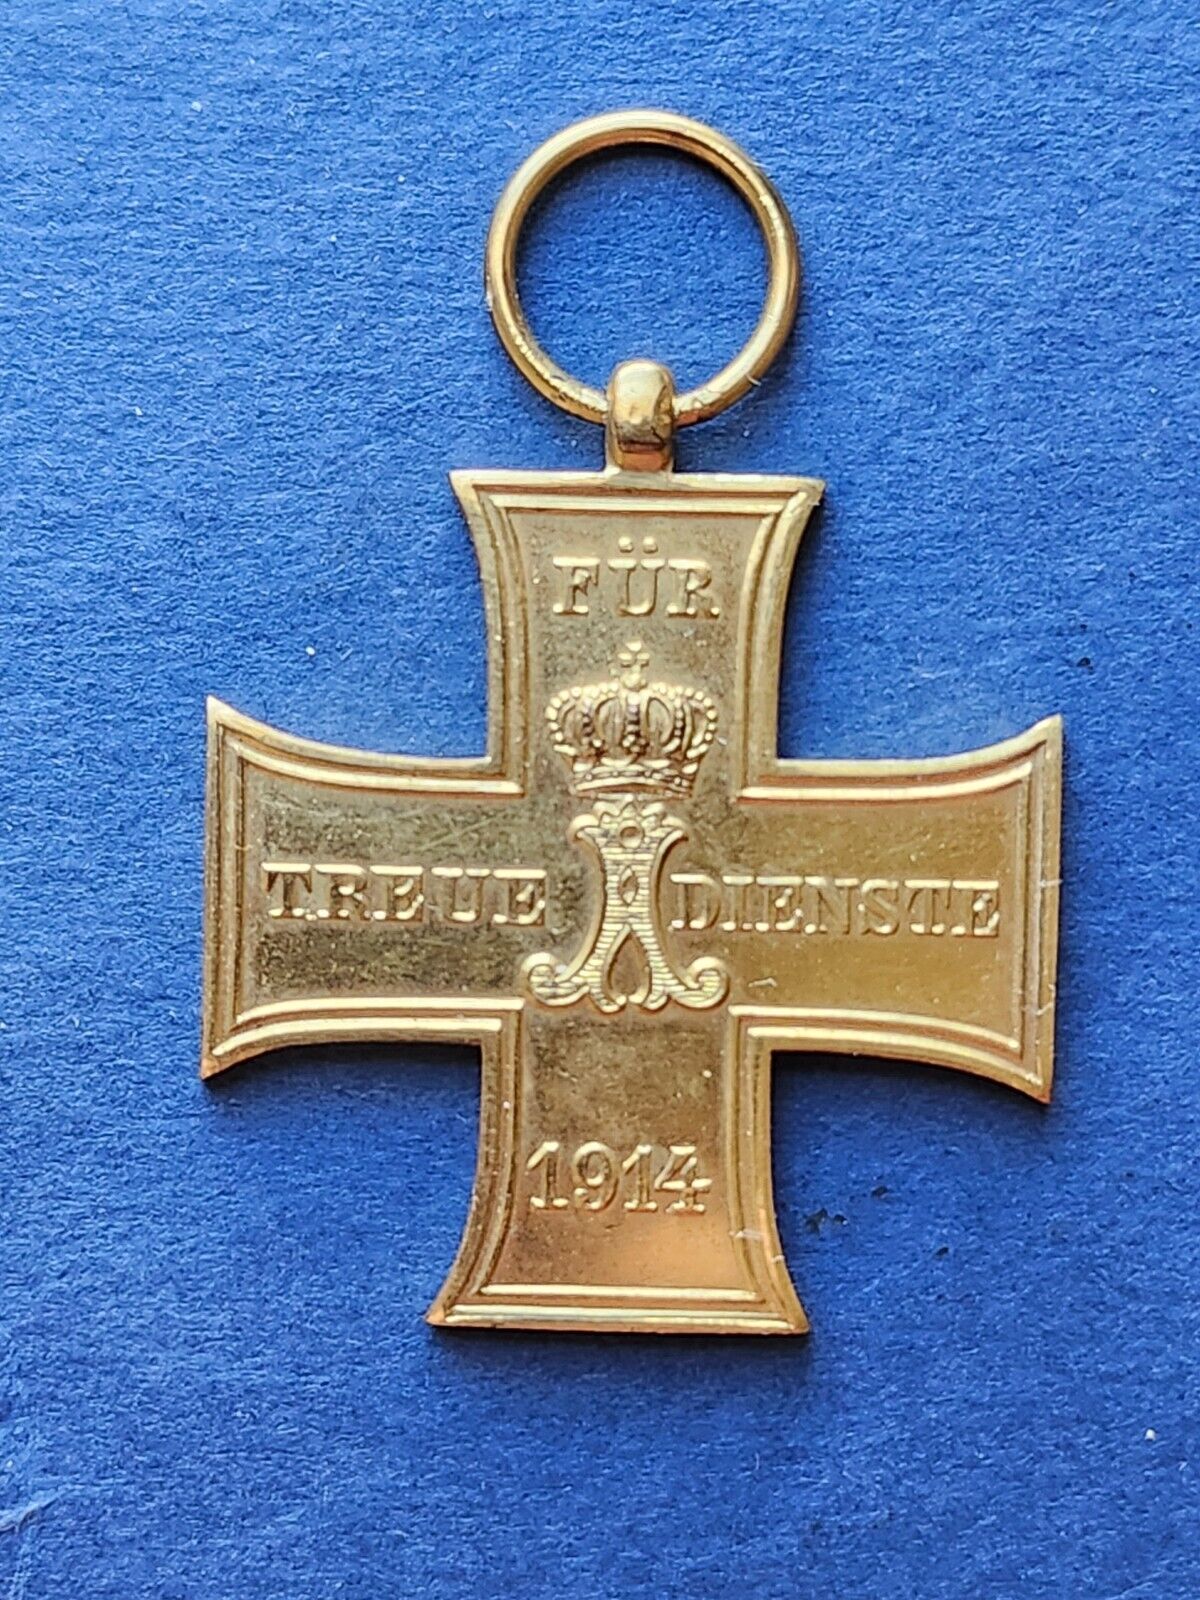 Schaumburg-Lippe Faithful Service Cross German Empire WWI